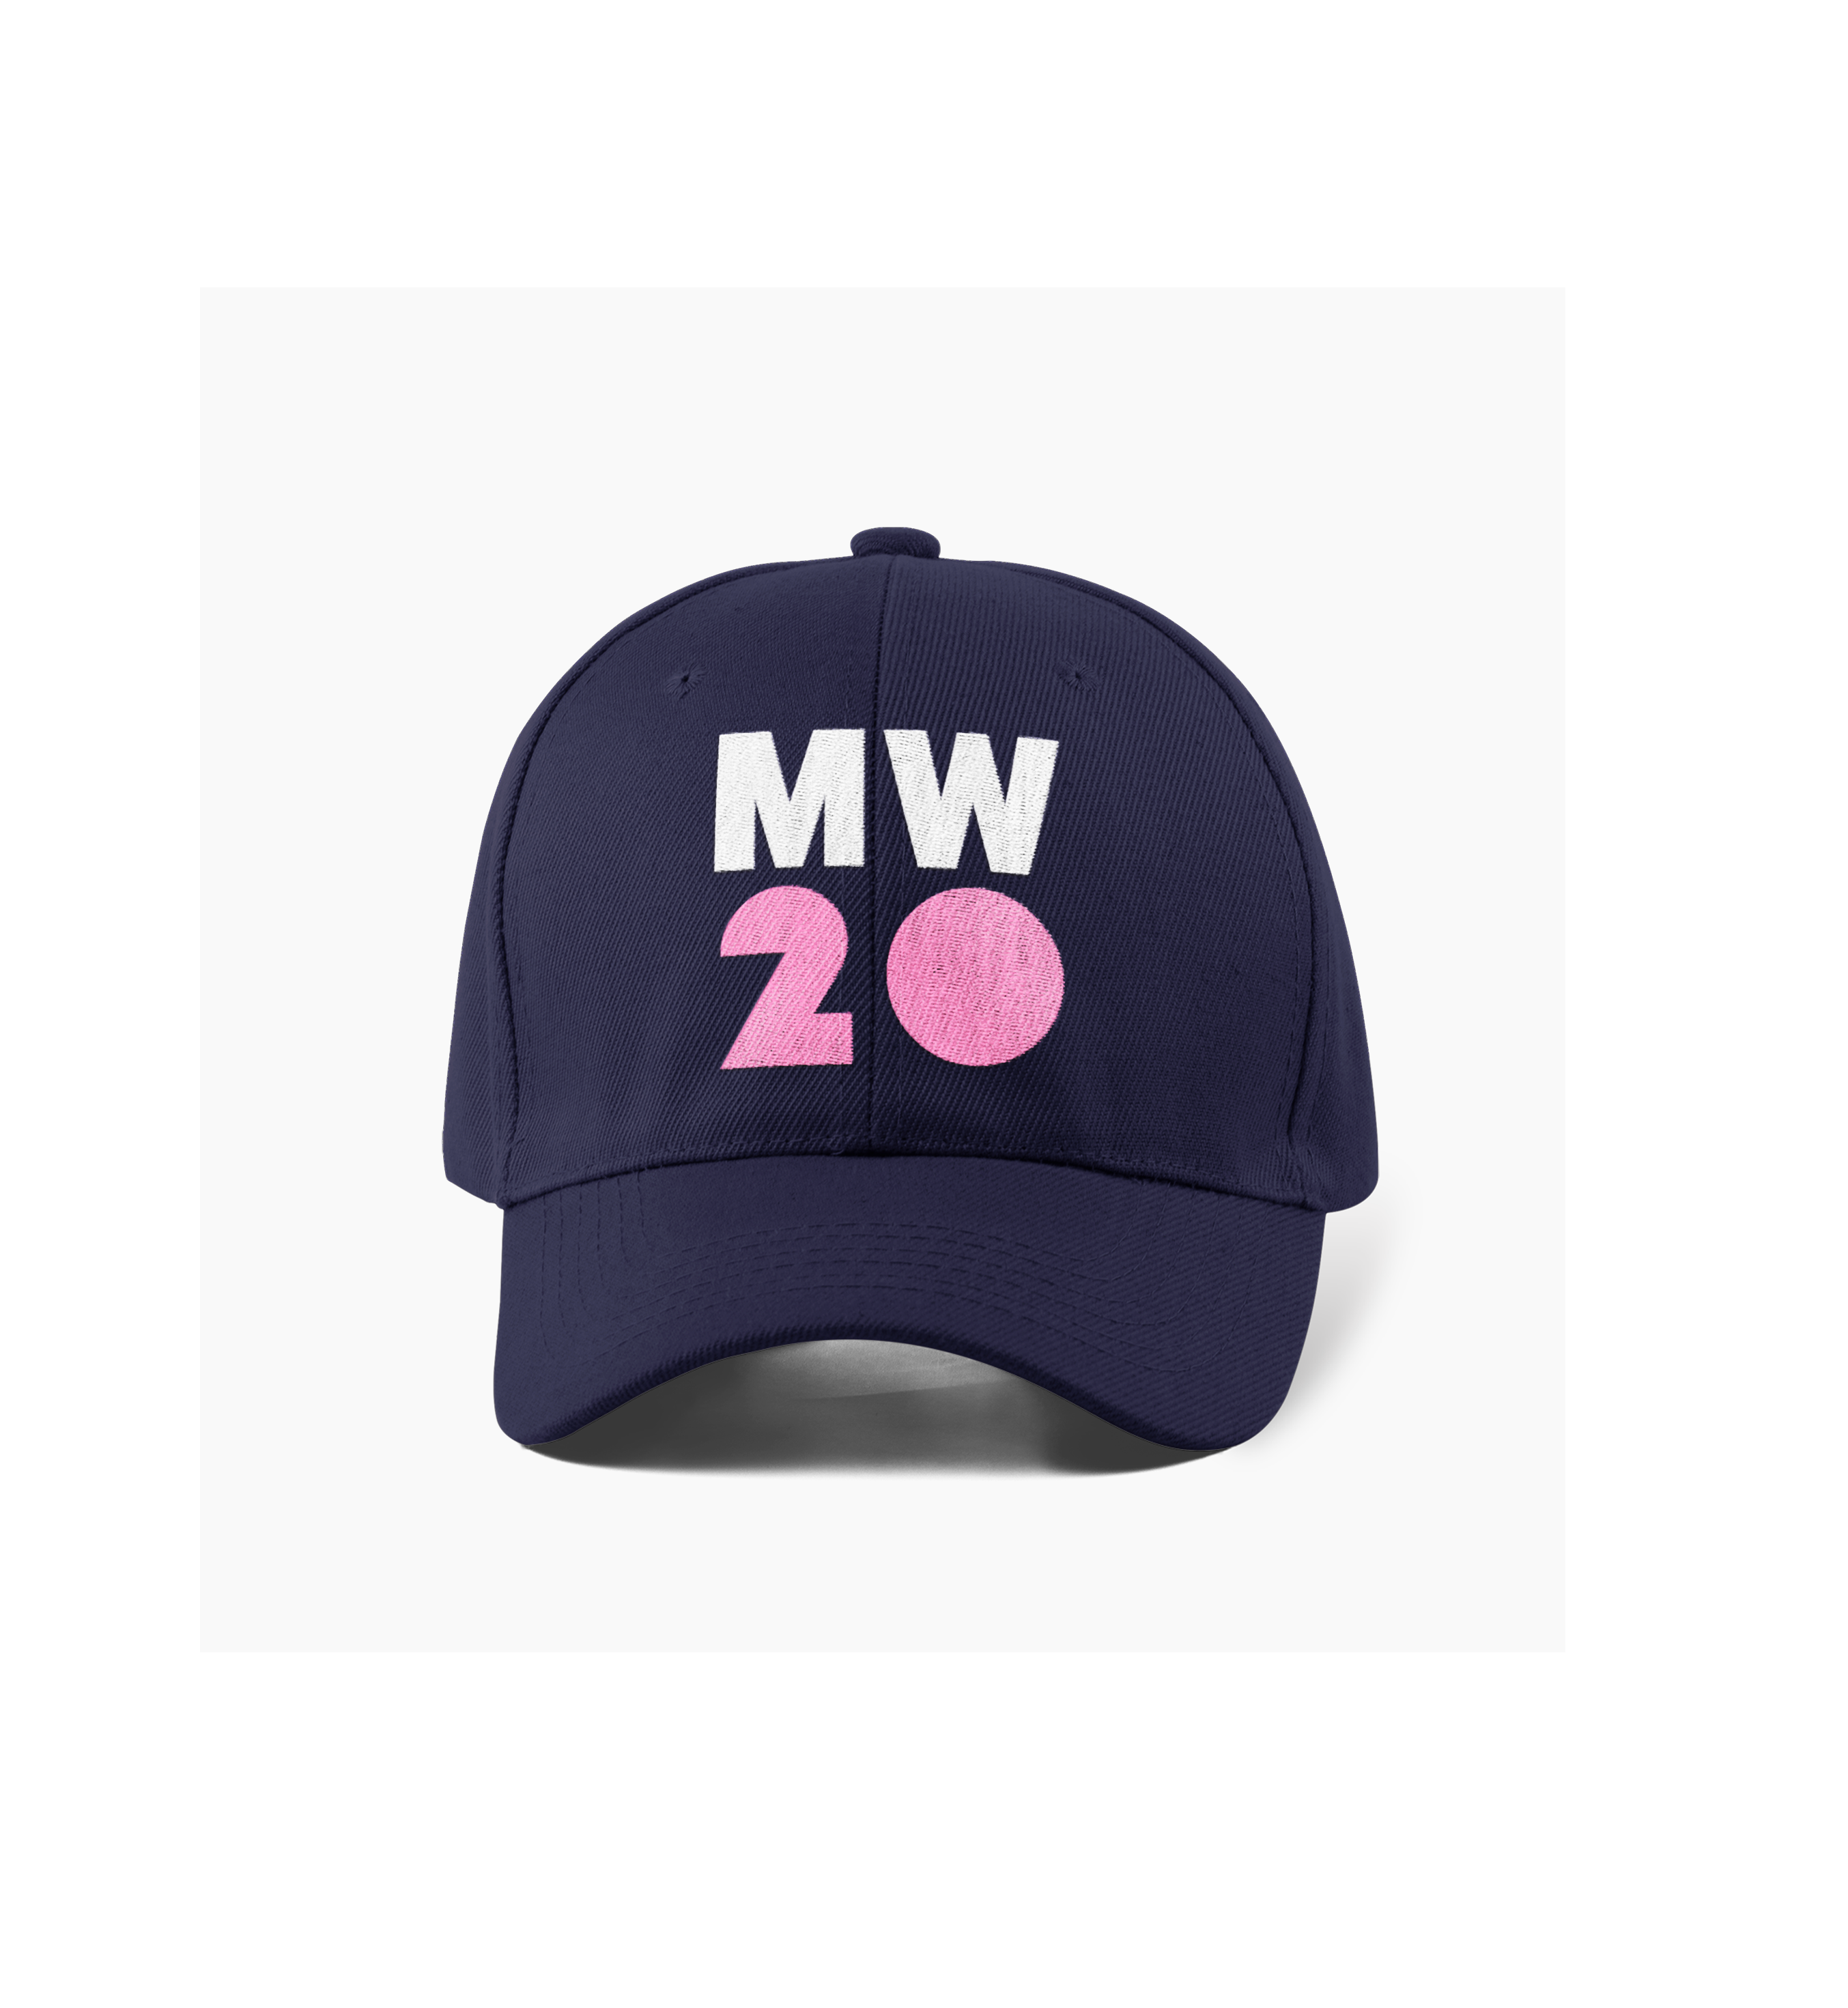 "MW 20" Campaign Cap